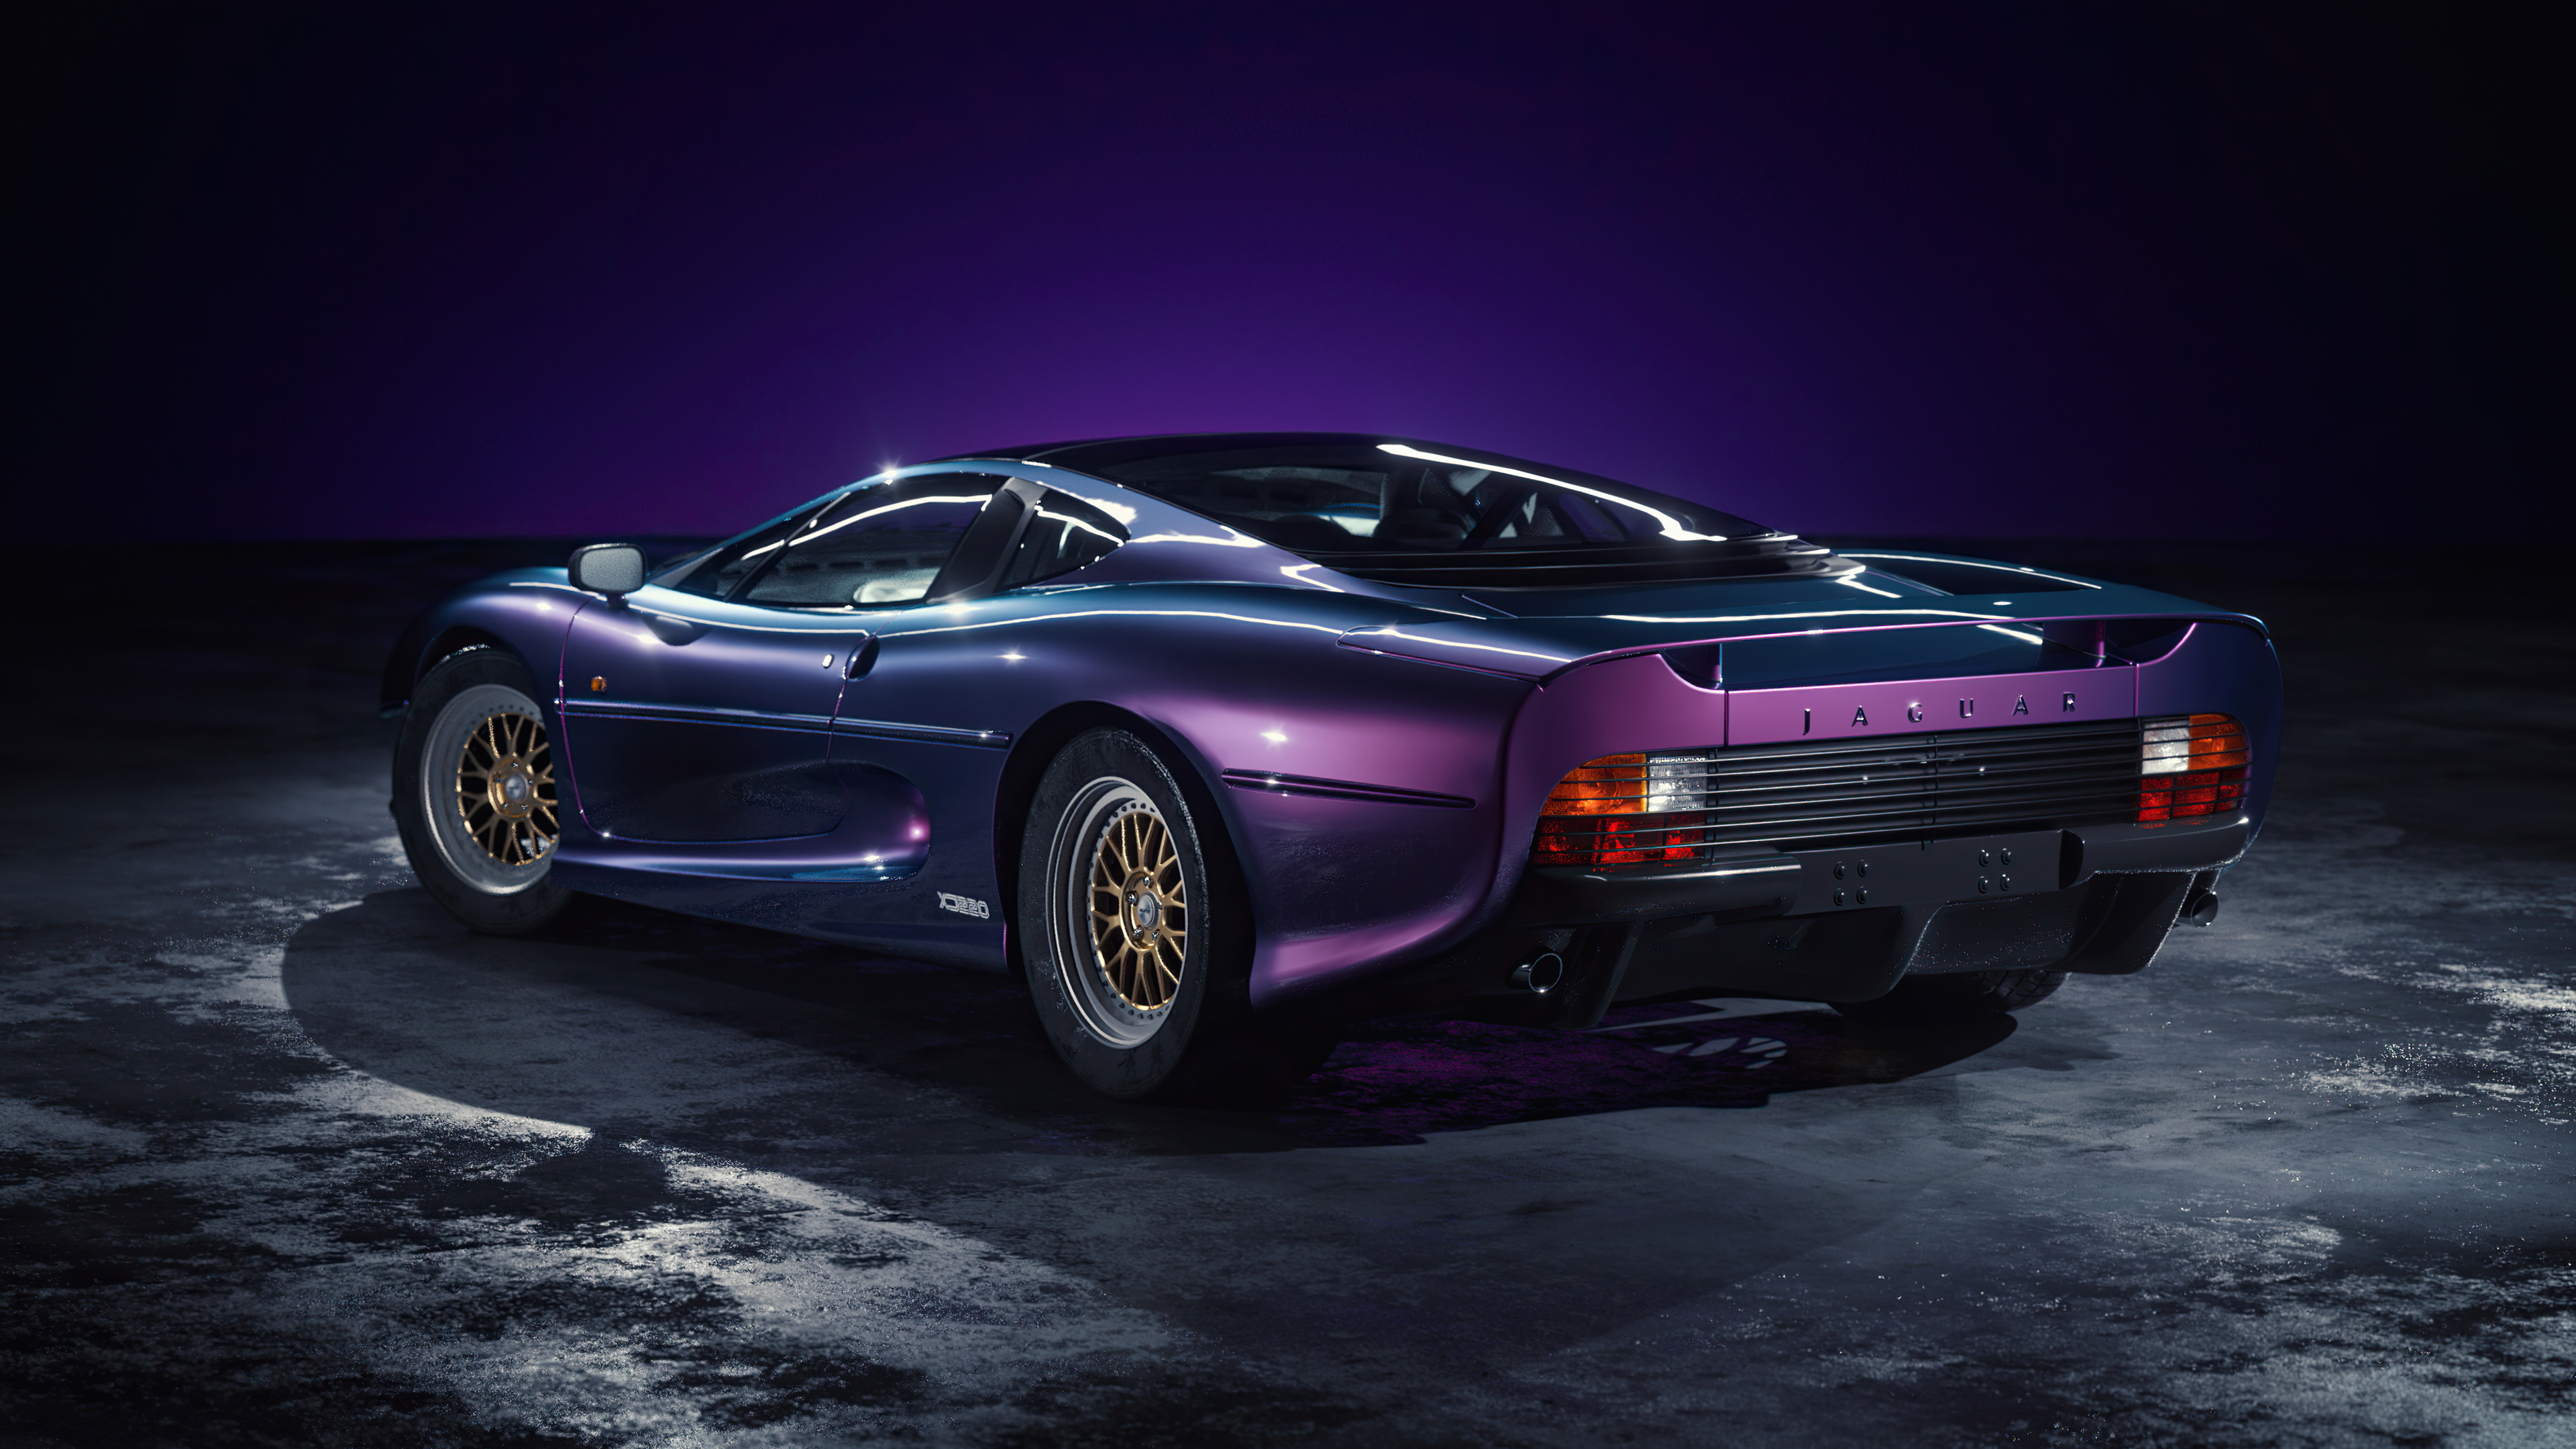 Jaguar XJ 220 Purple 4k, HD Cars, 4k Wallpaper, Image, Background, Photo and Picture